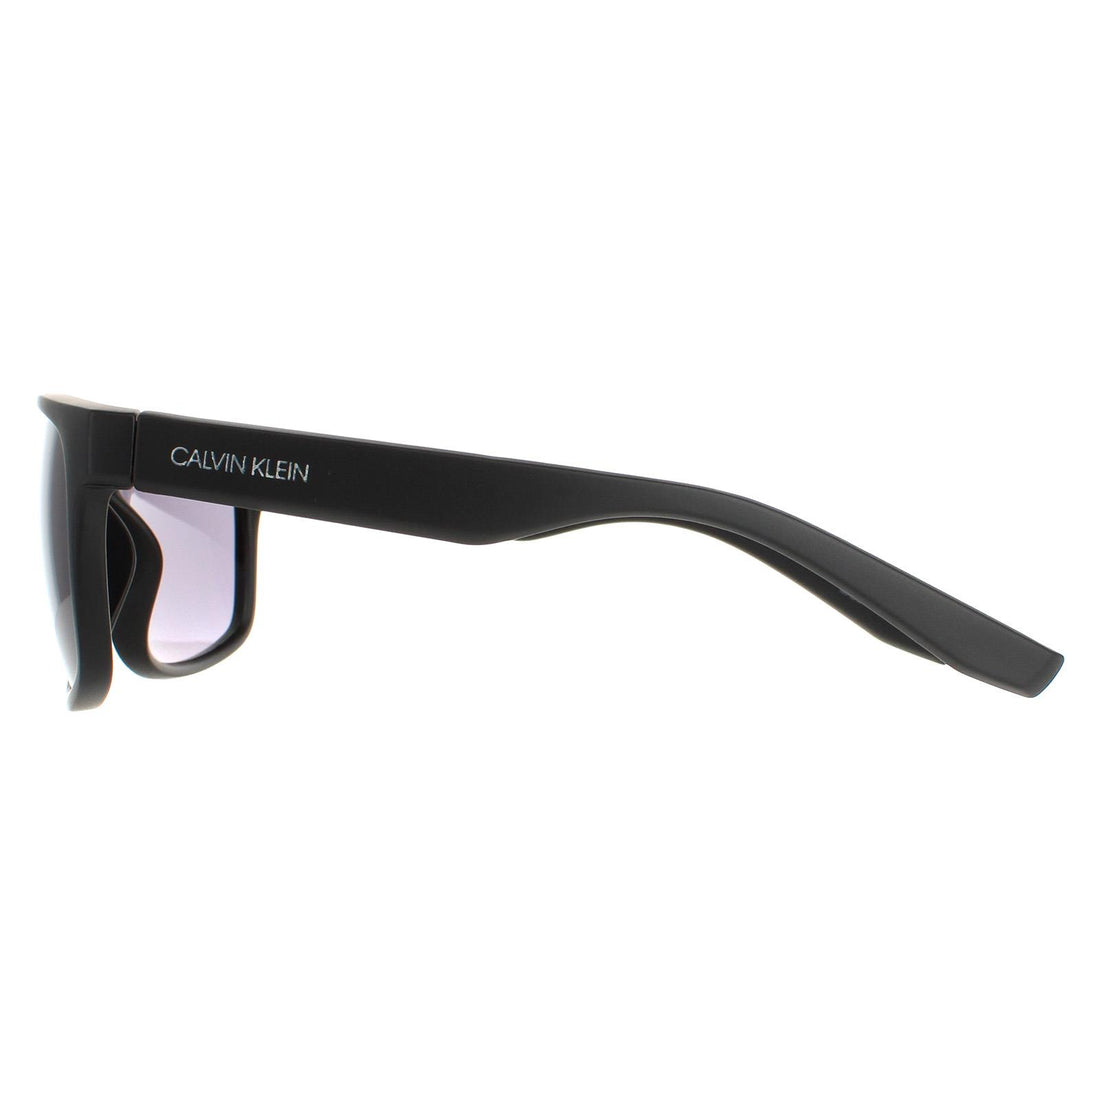 Calvin Klein Sunglasses CK19539S 001 Matte Black Smoke Grey